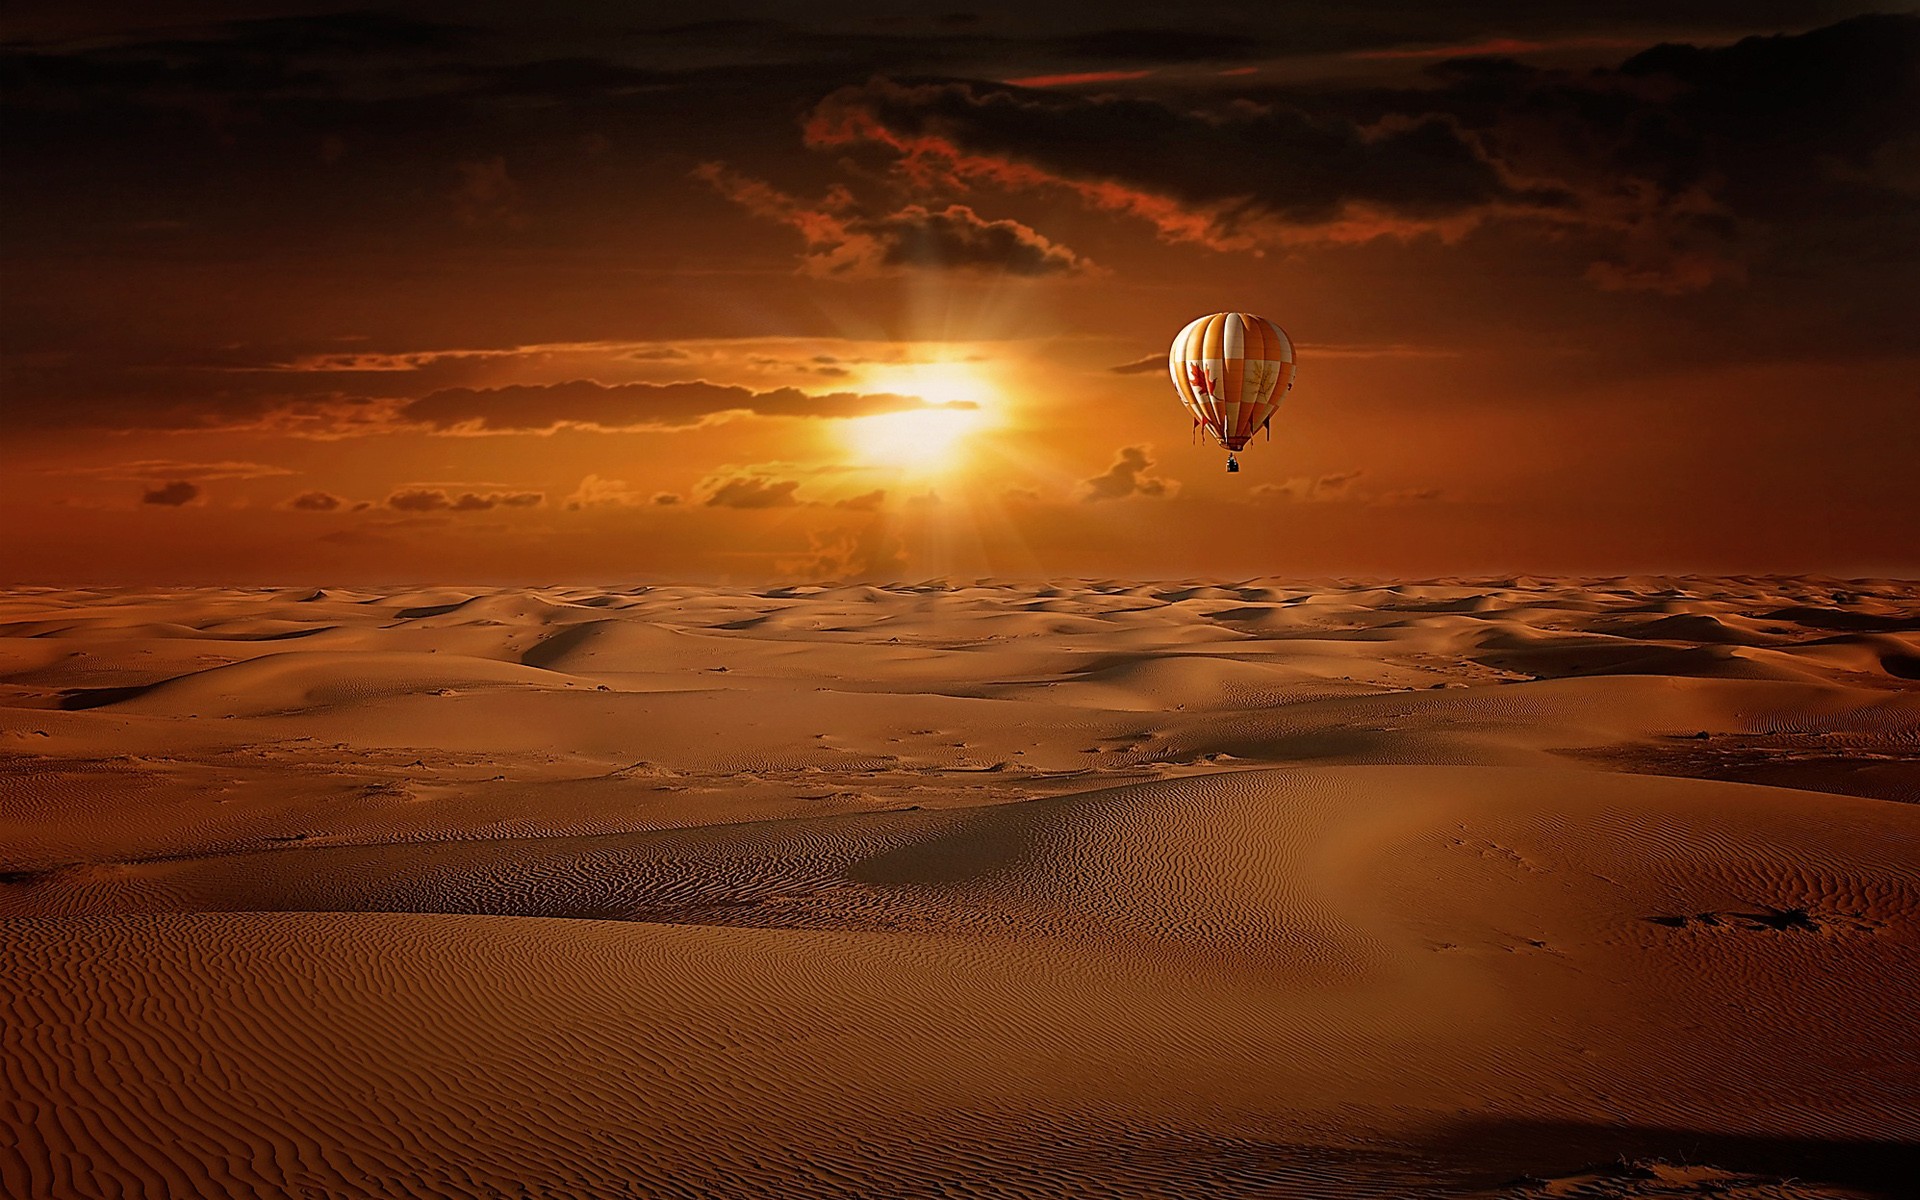 General 1920x1200 desert landscape hot air balloons dunes vehicle sky sunlight nature red sky